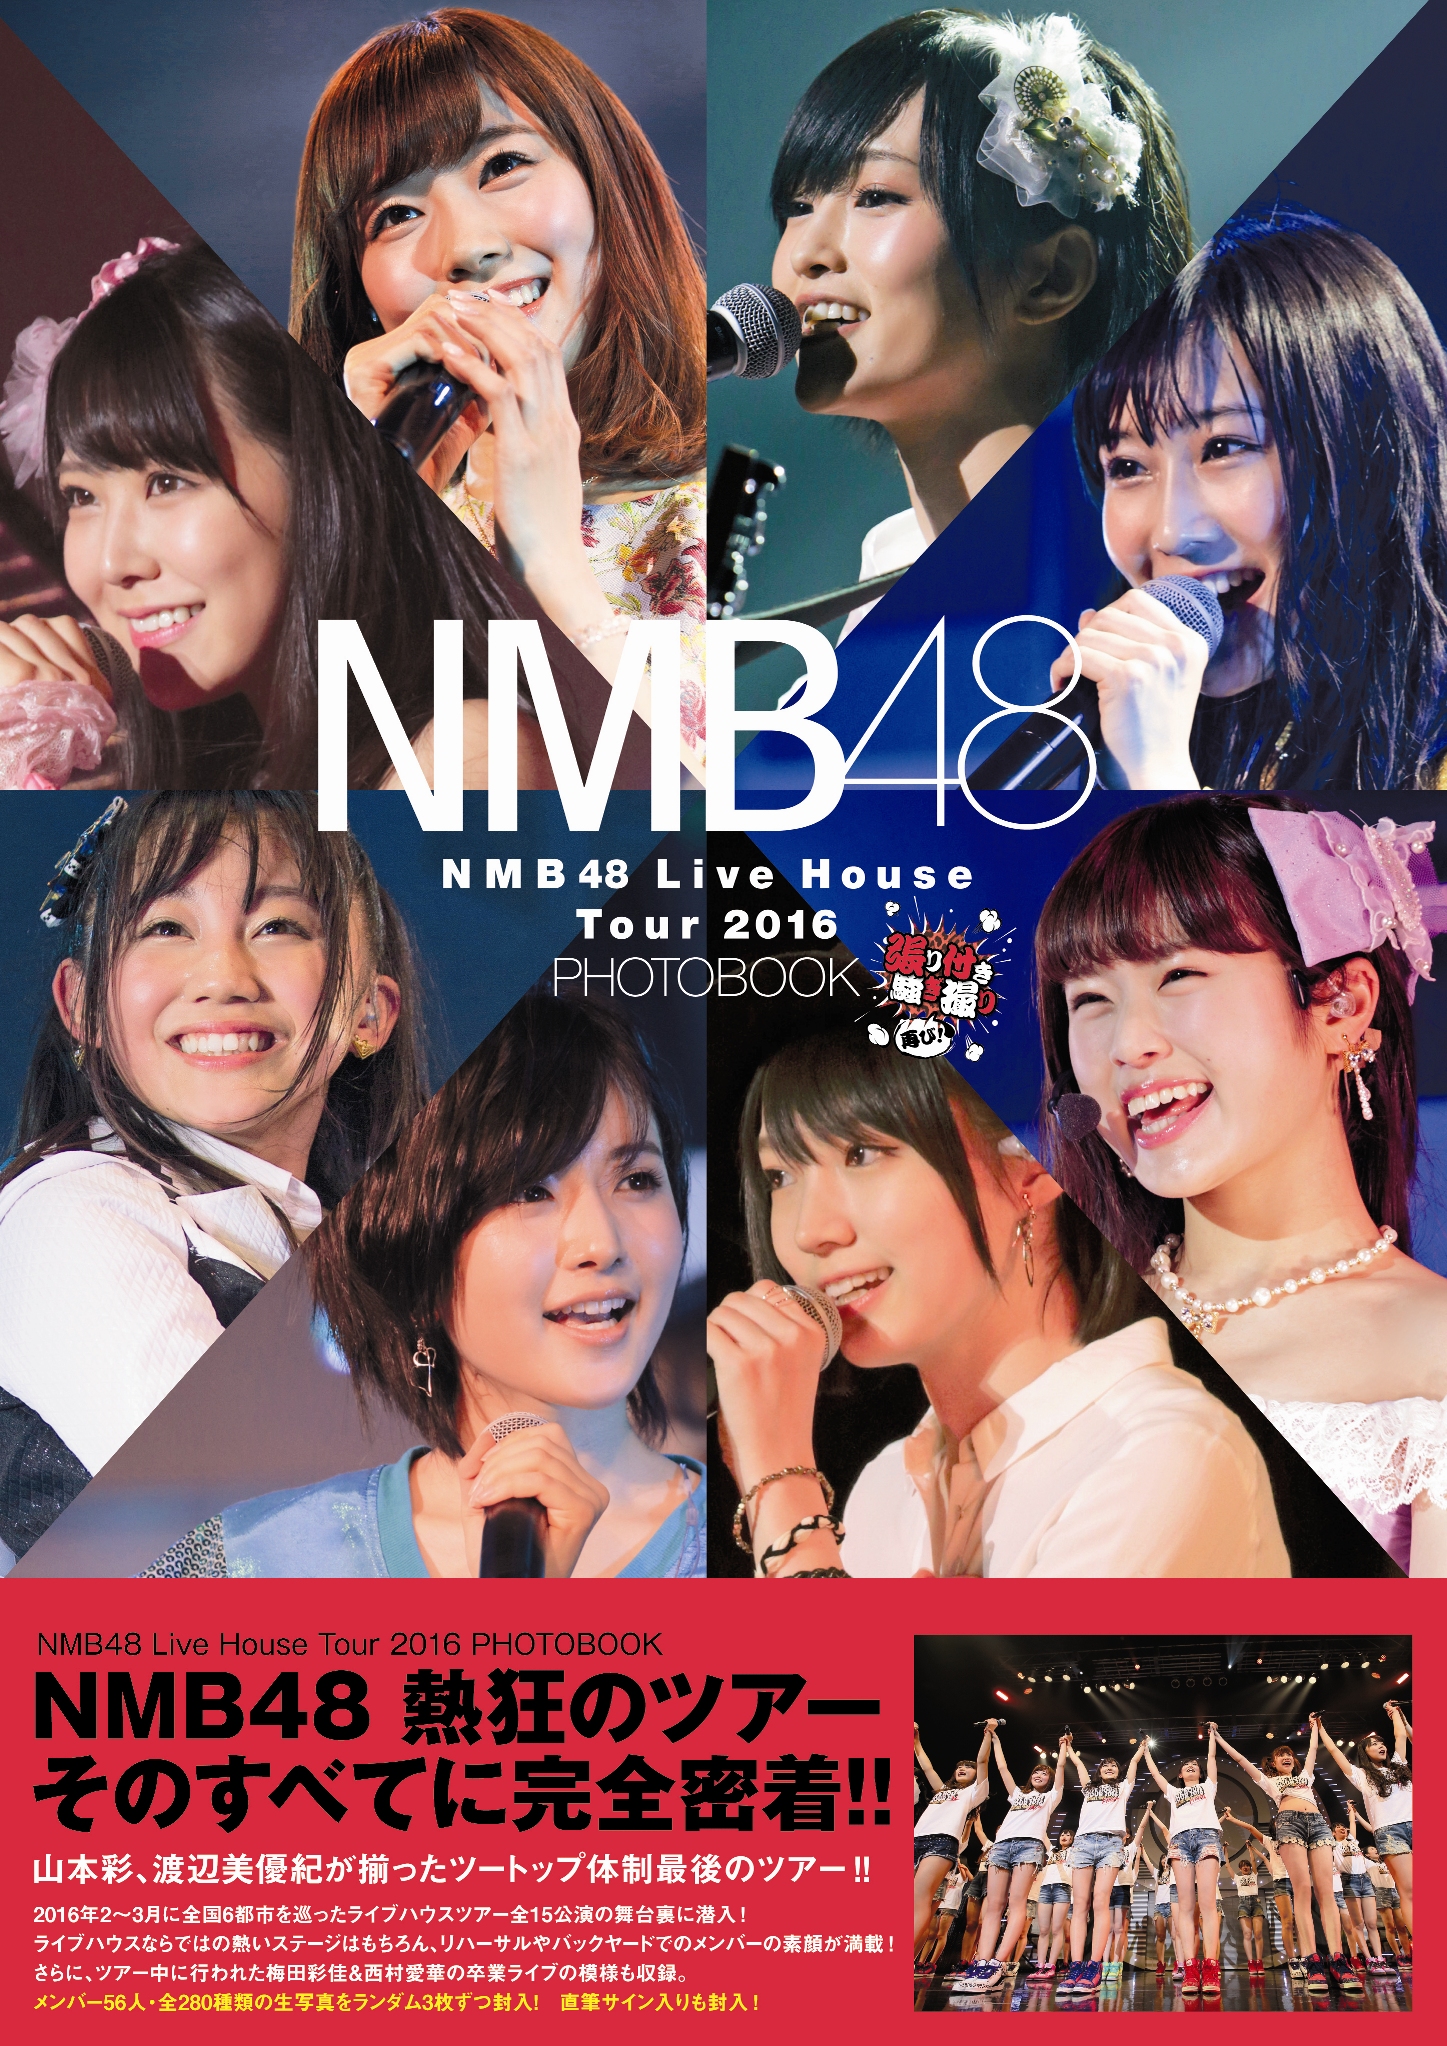 NMB48のライブツアーの裏側に完全密着した写真集 株式会社東京ニュース通信社のプレスリリース